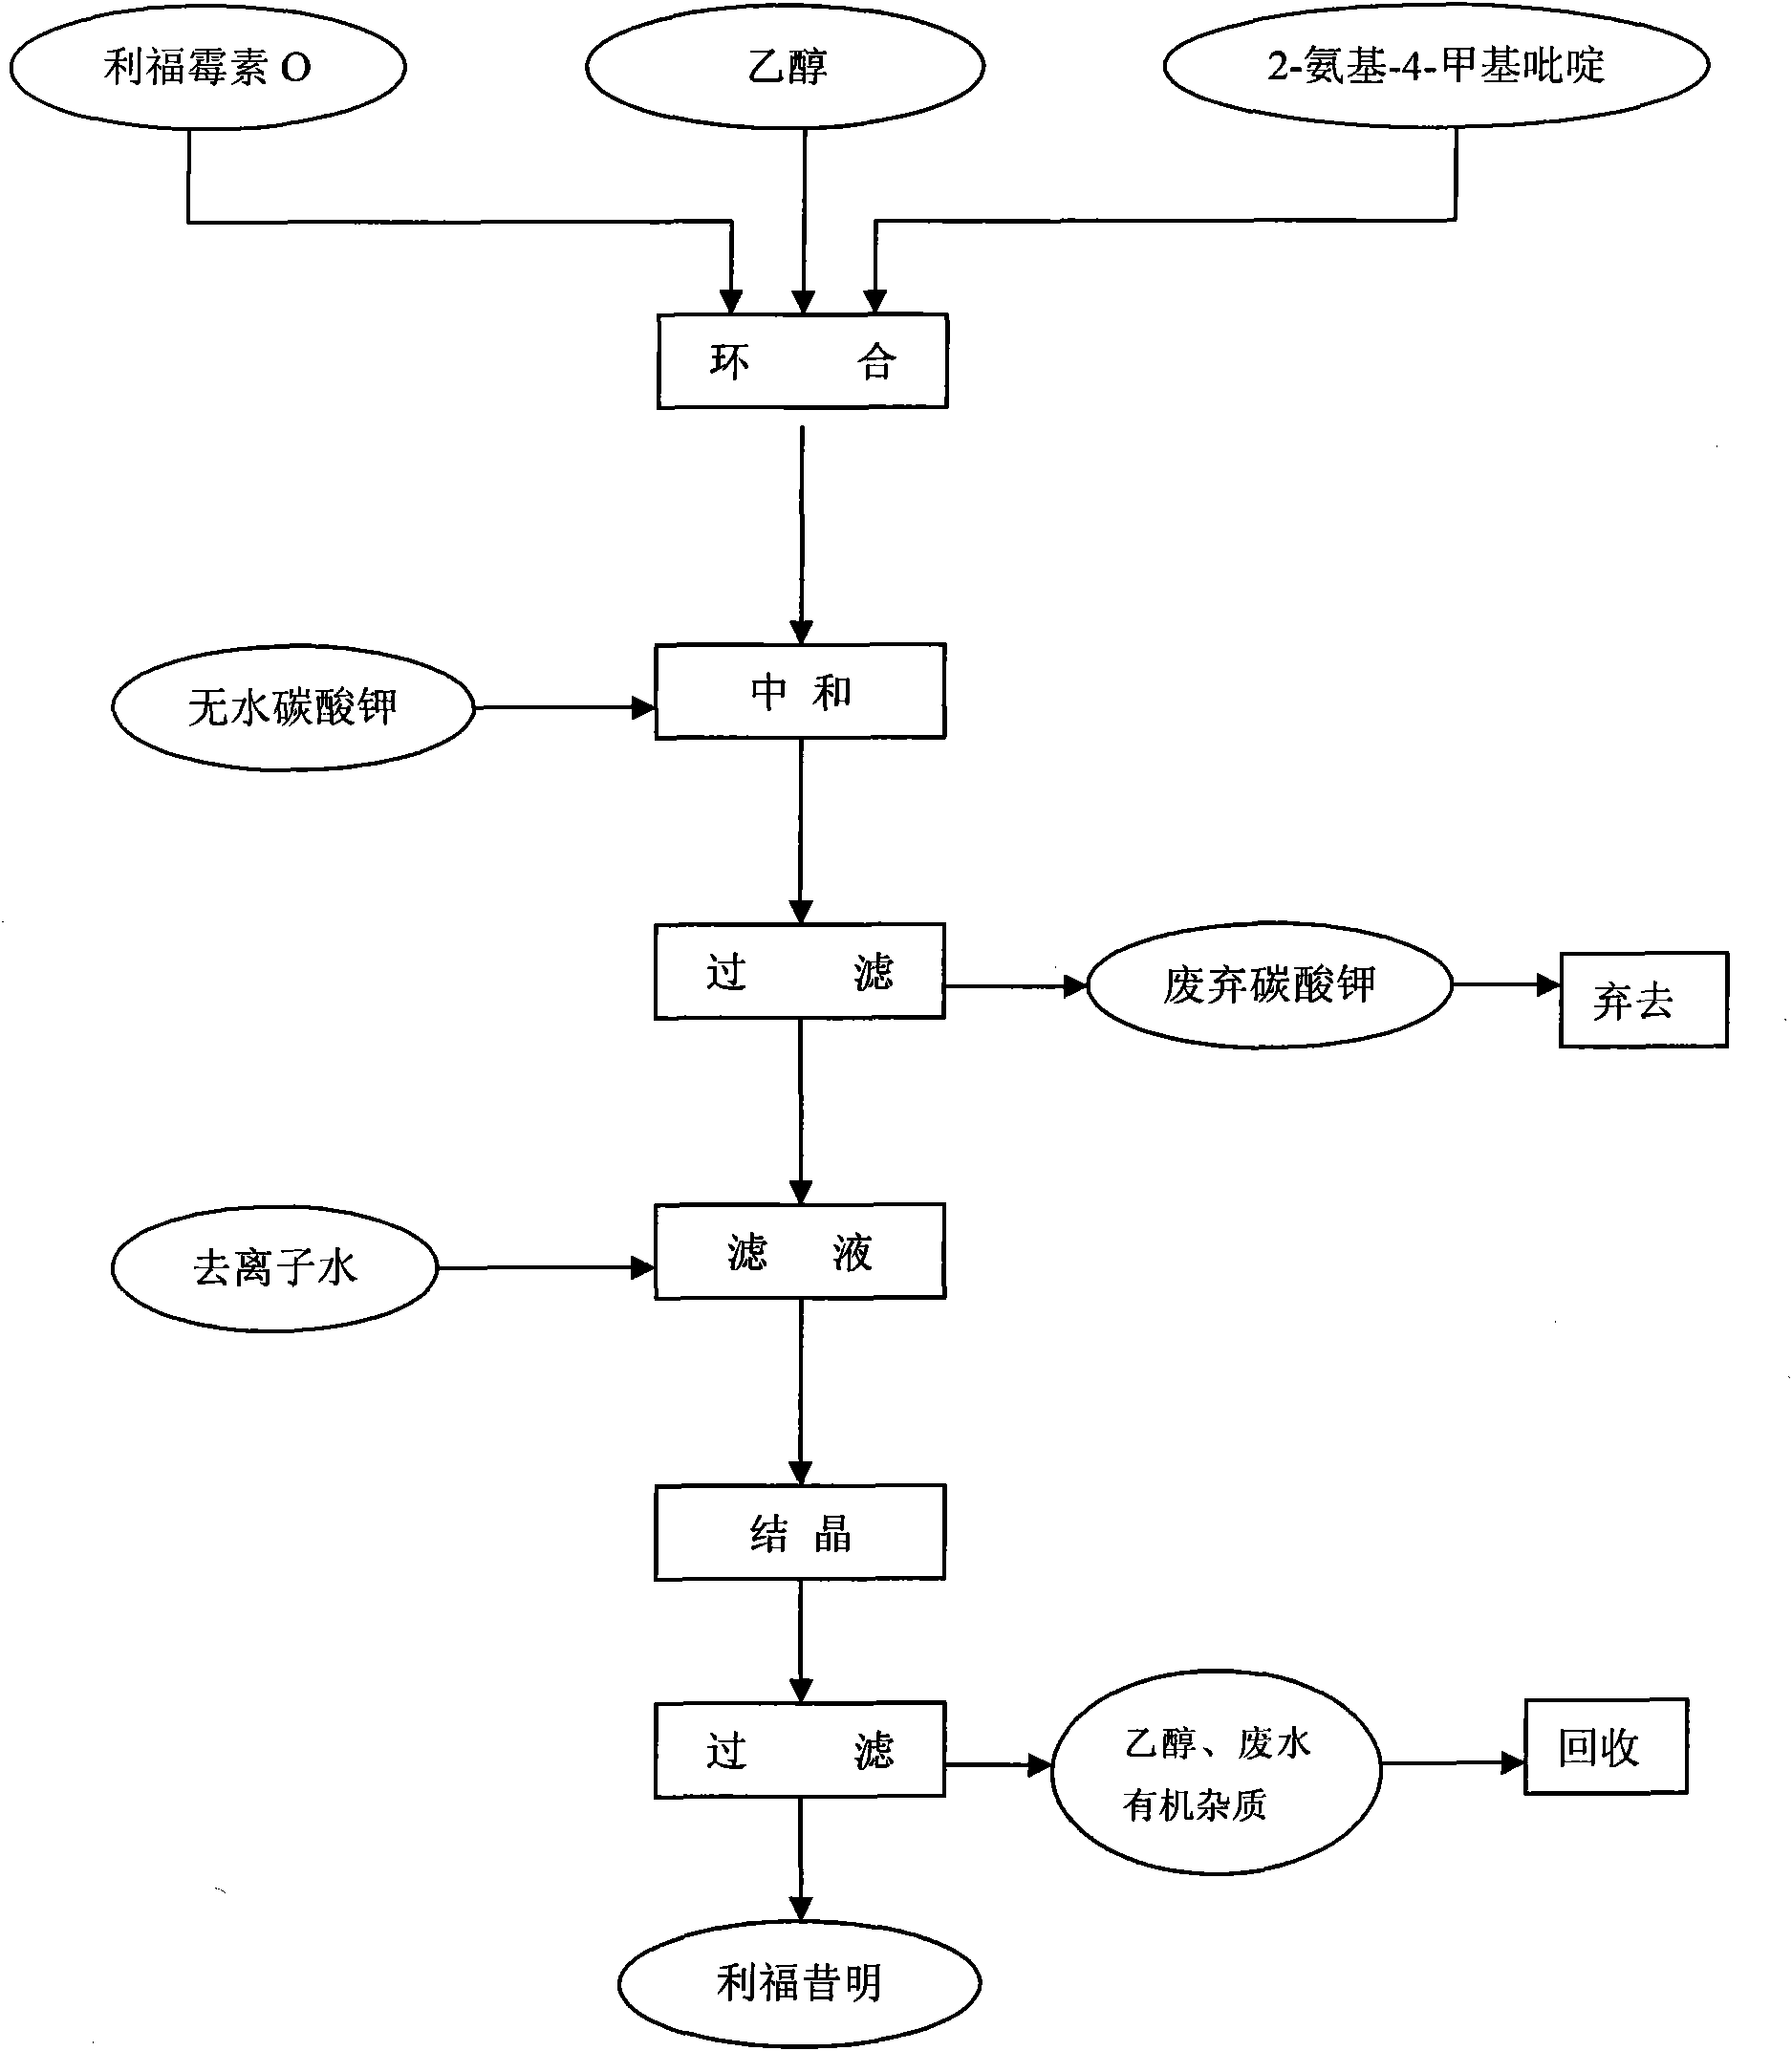 Process for preparing rifaximin